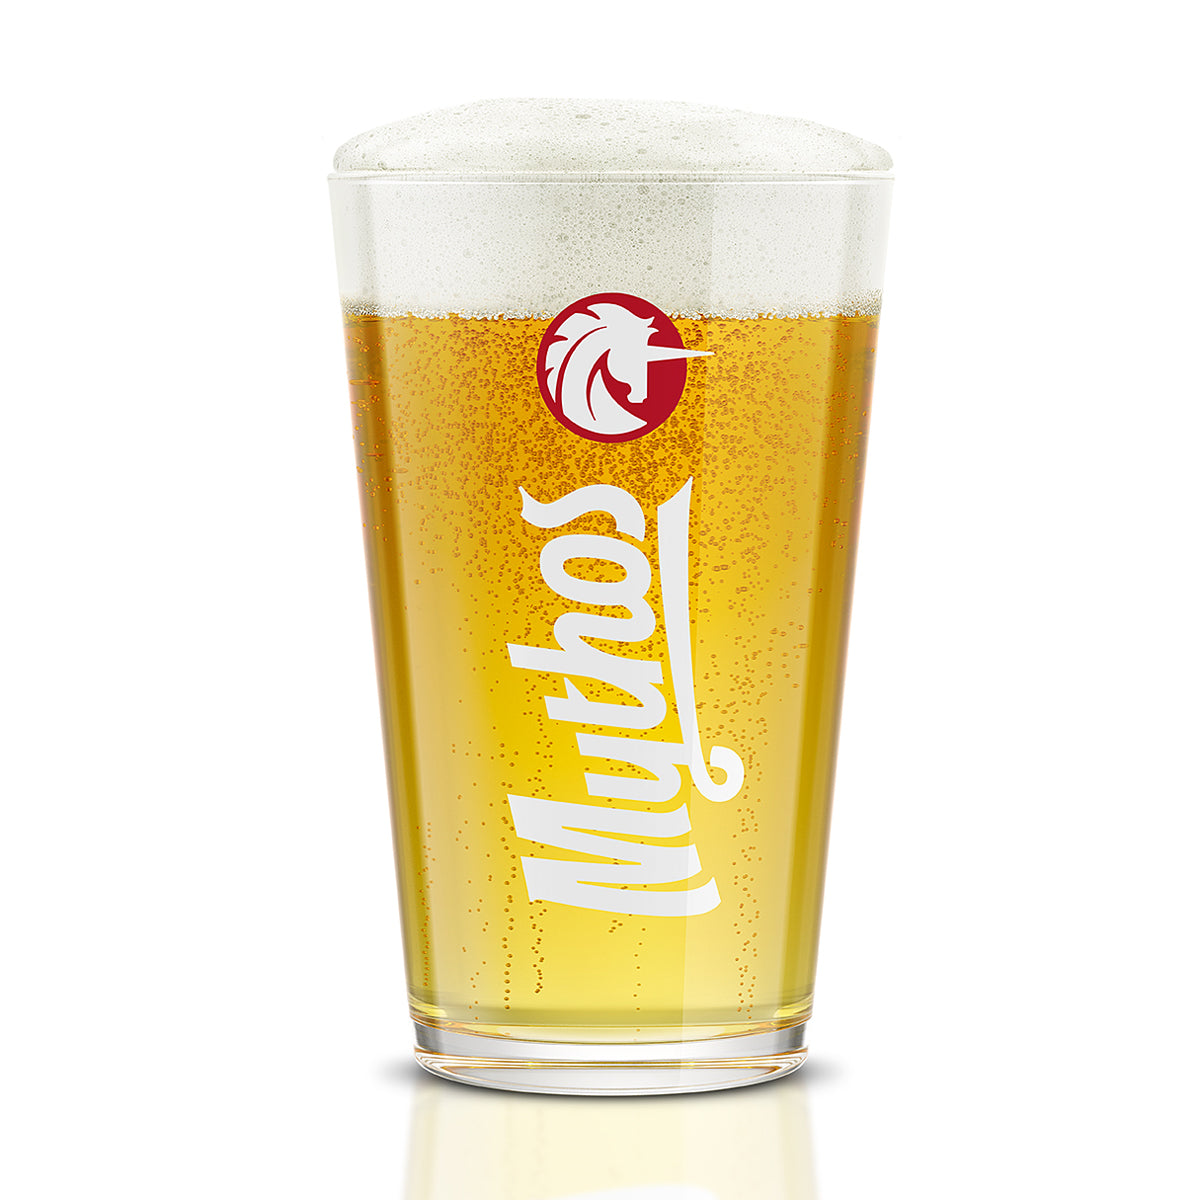 Mythos beer glass (300ml)